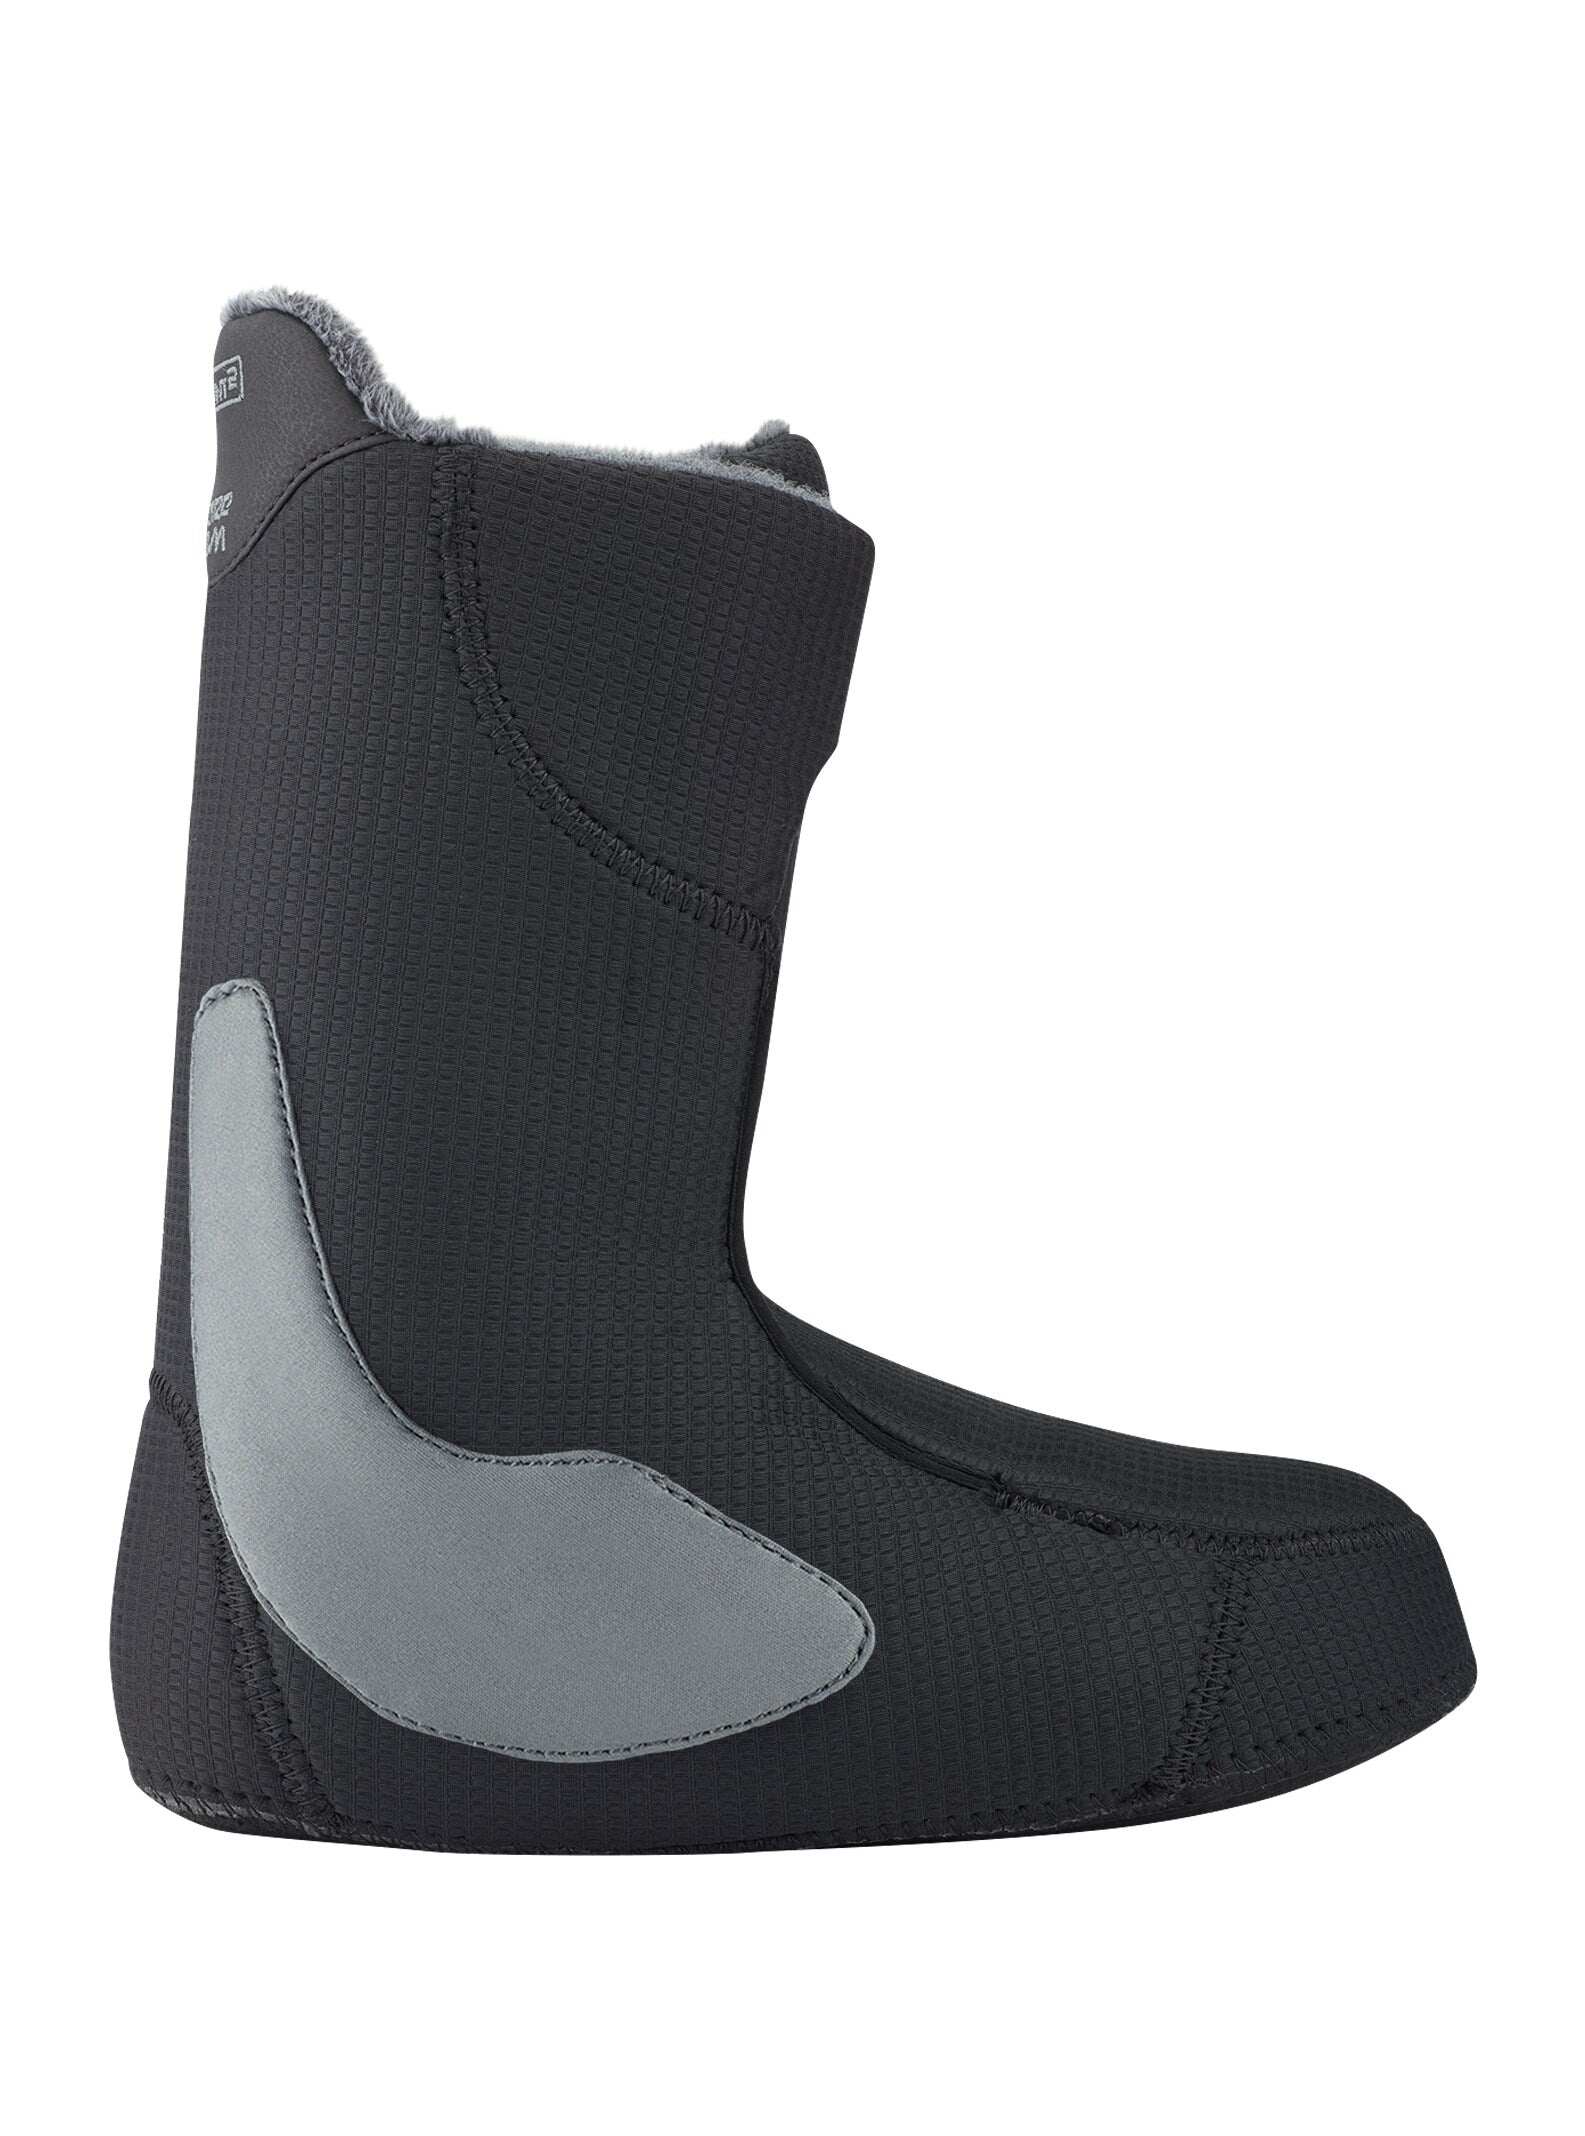 Men's Burton Ruler Snowboard Boots - Wide Default Title Snowboard Boots